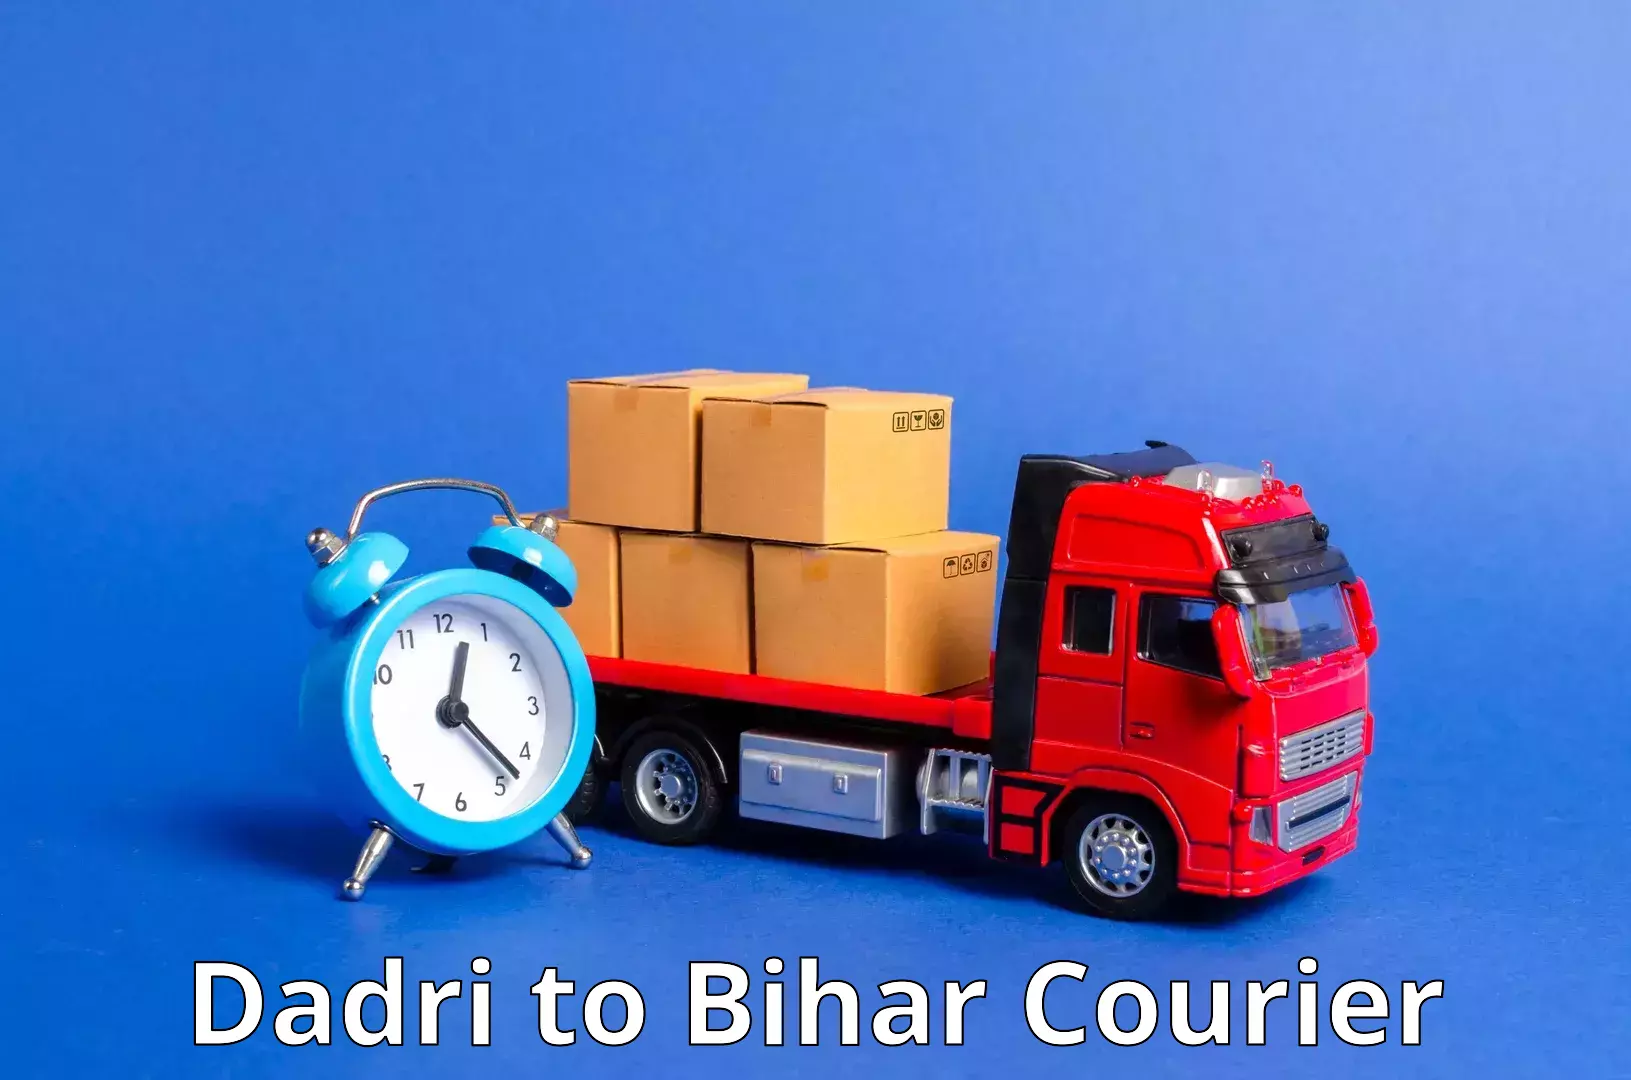 High-speed parcel service Dadri to Sirdala